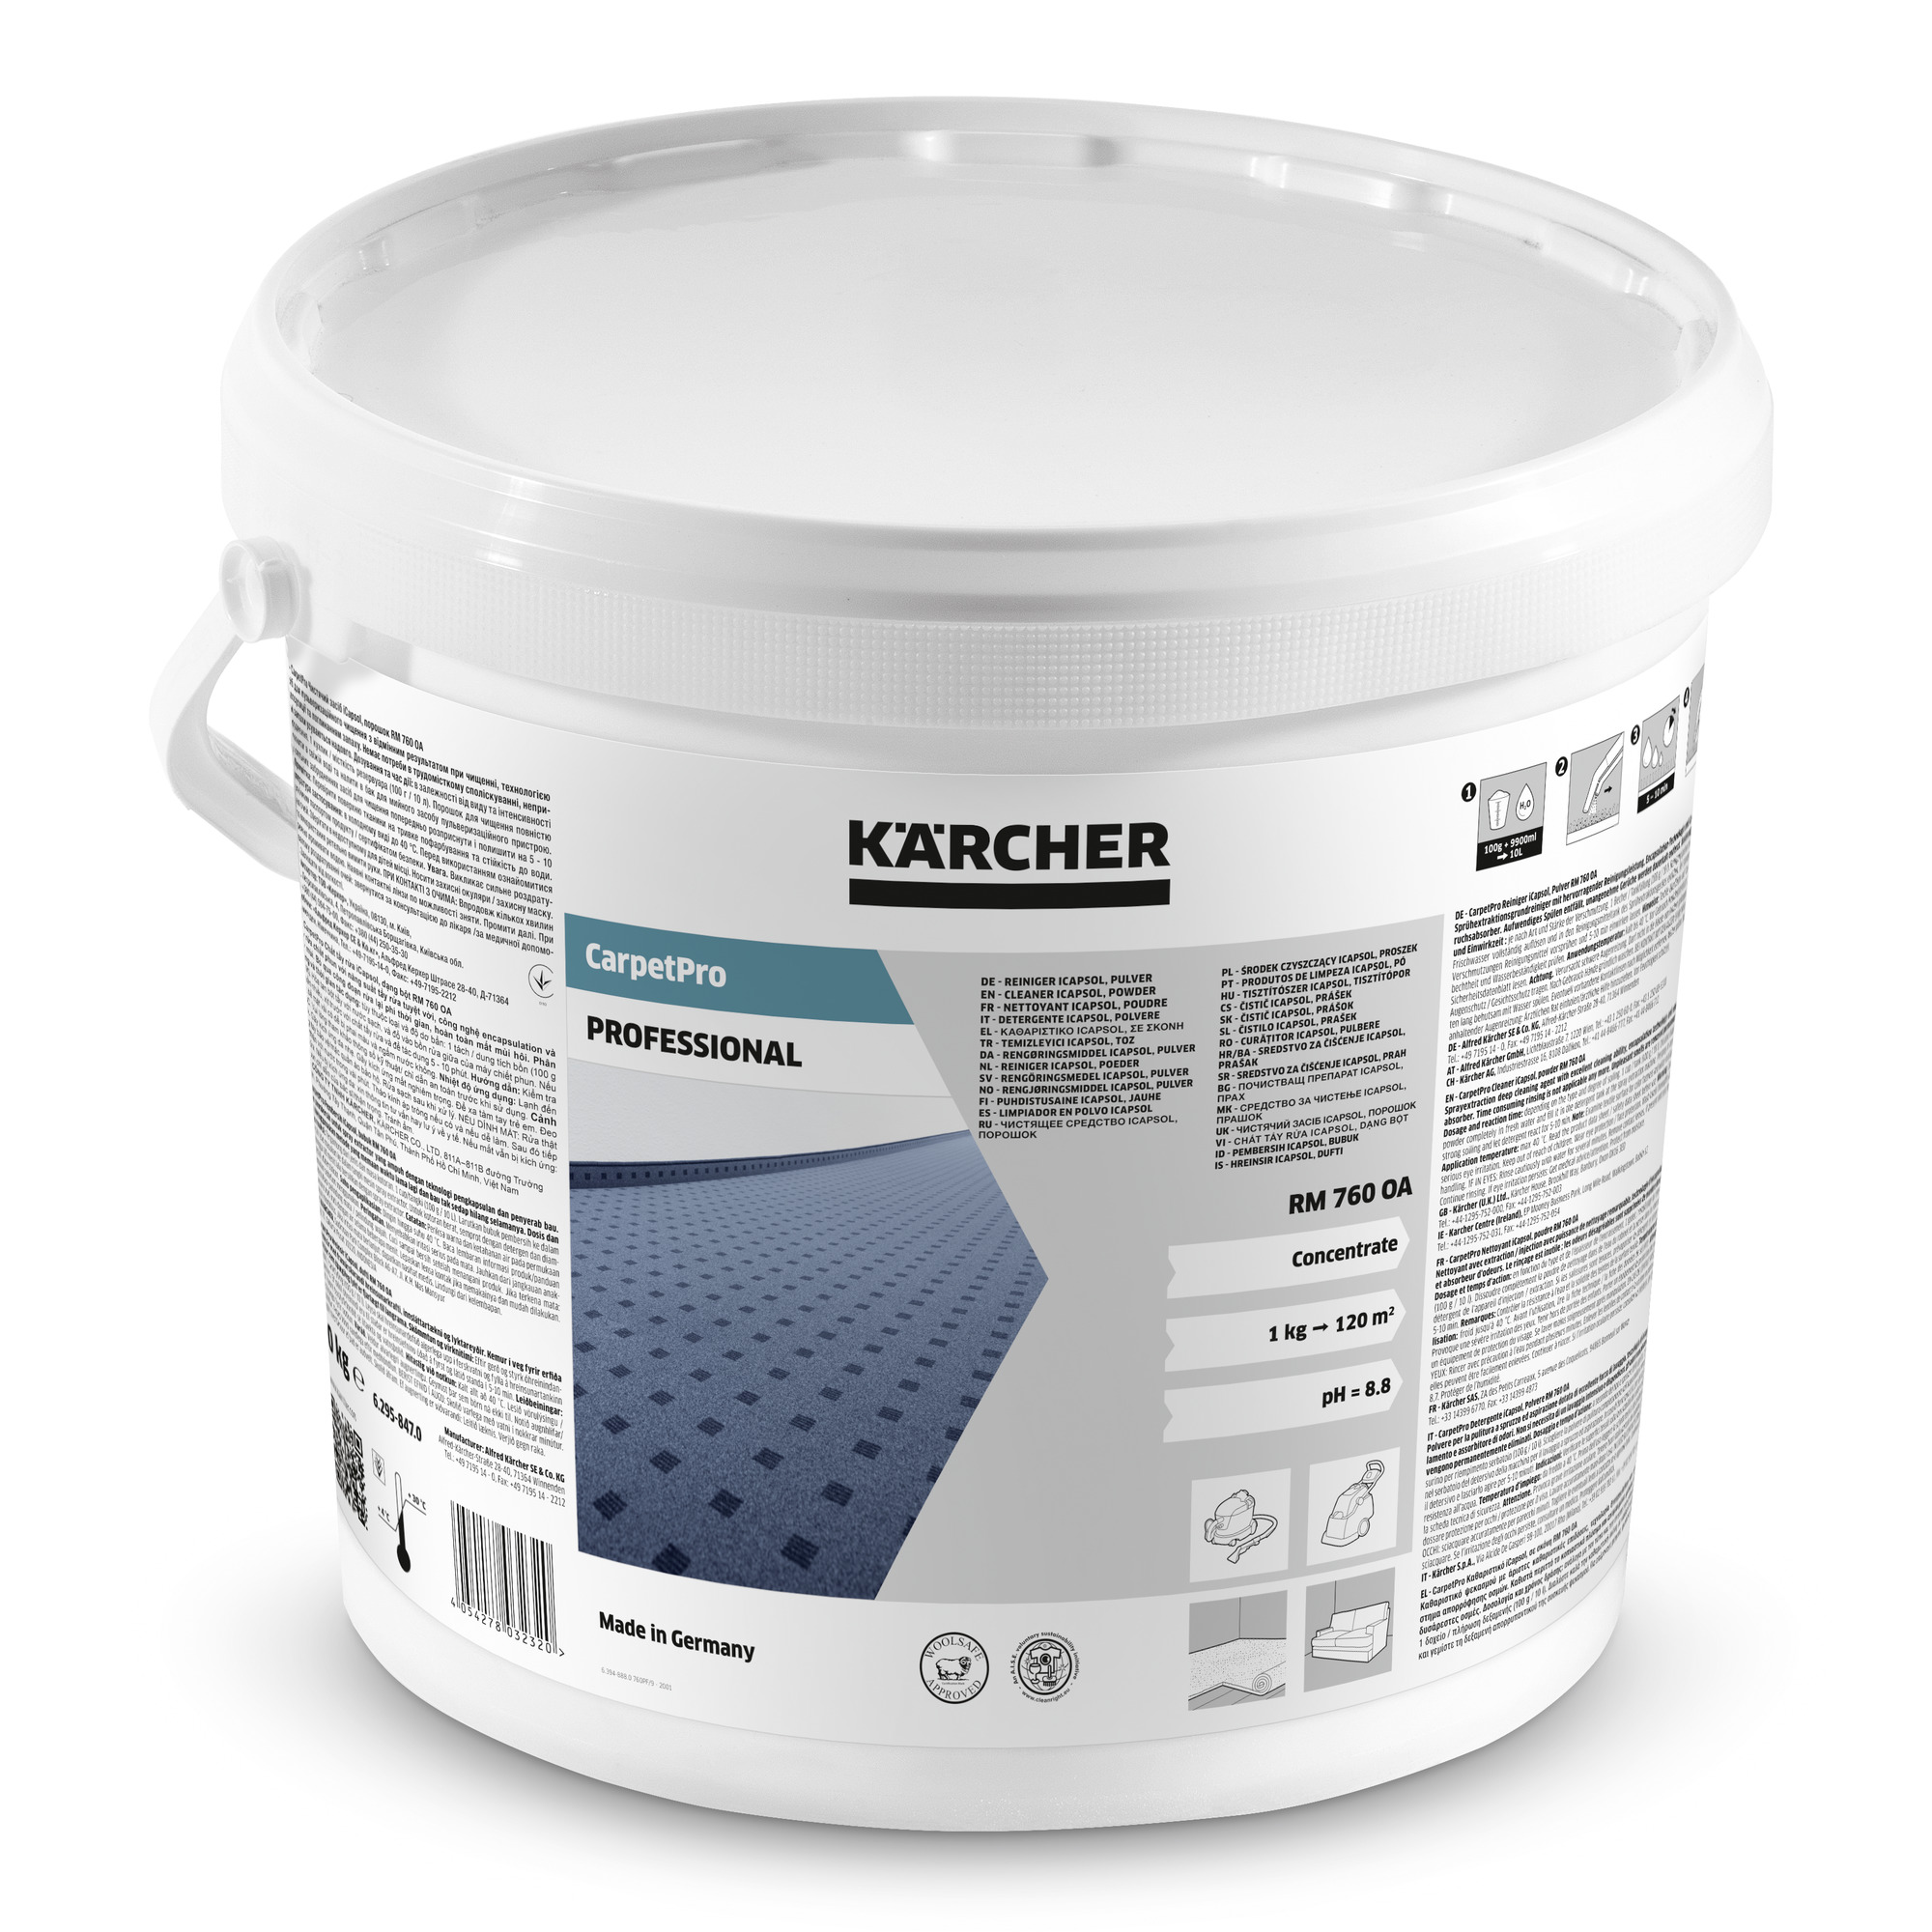 Kaercher CarpetPro Cleaner iCapsol, powder RM 760 OA